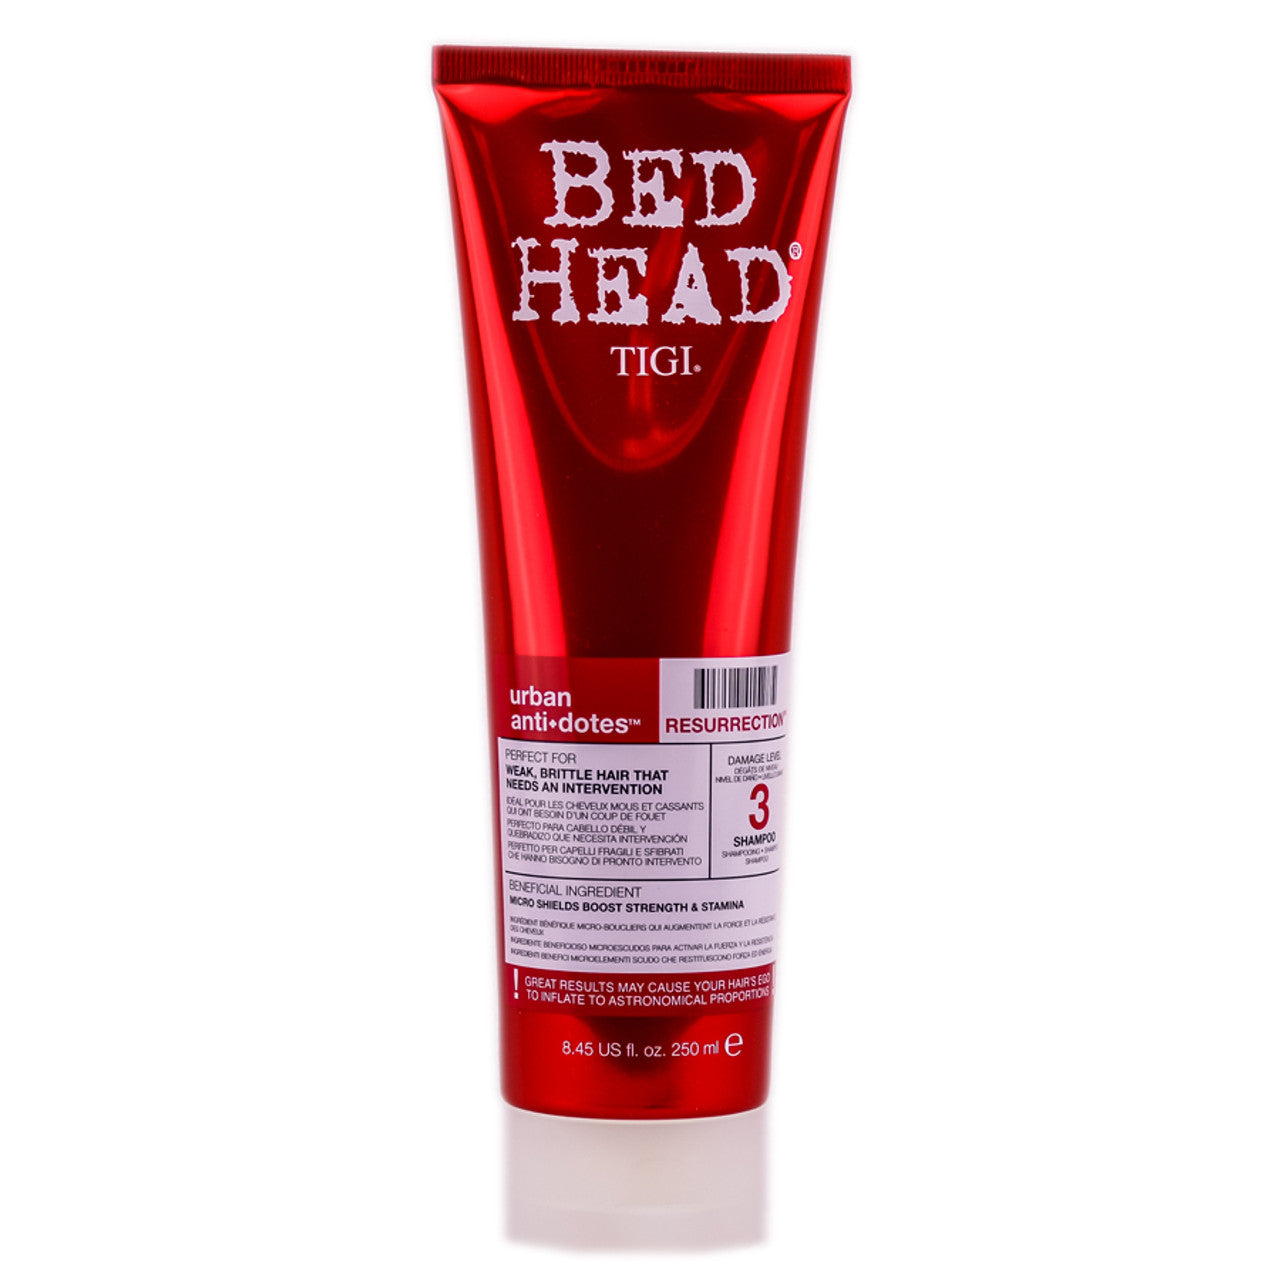 Bed Head by TIGI Urban Anti-dotes #3 Resurrection Shampoo